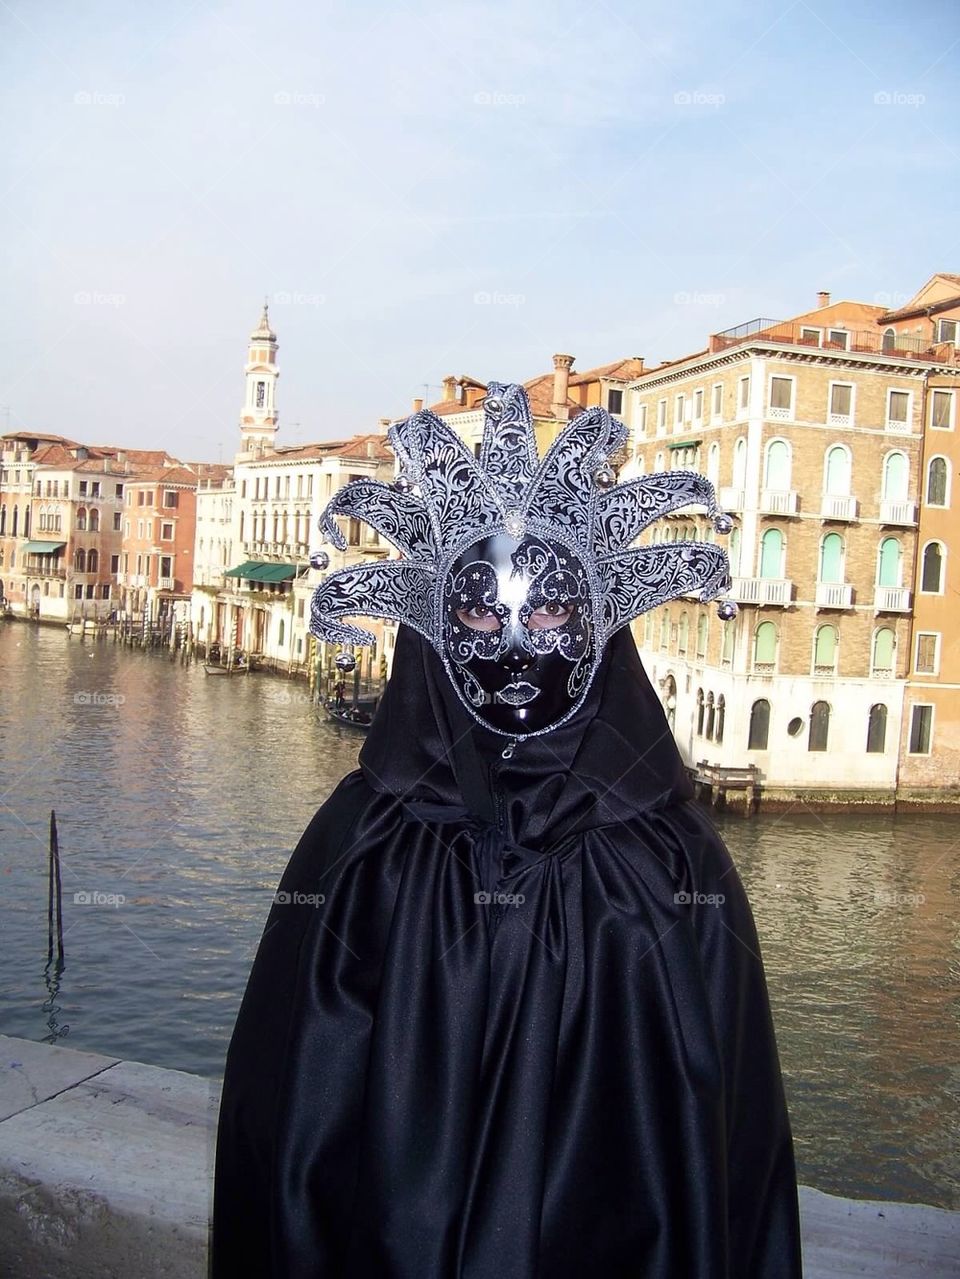 Carnivale mask